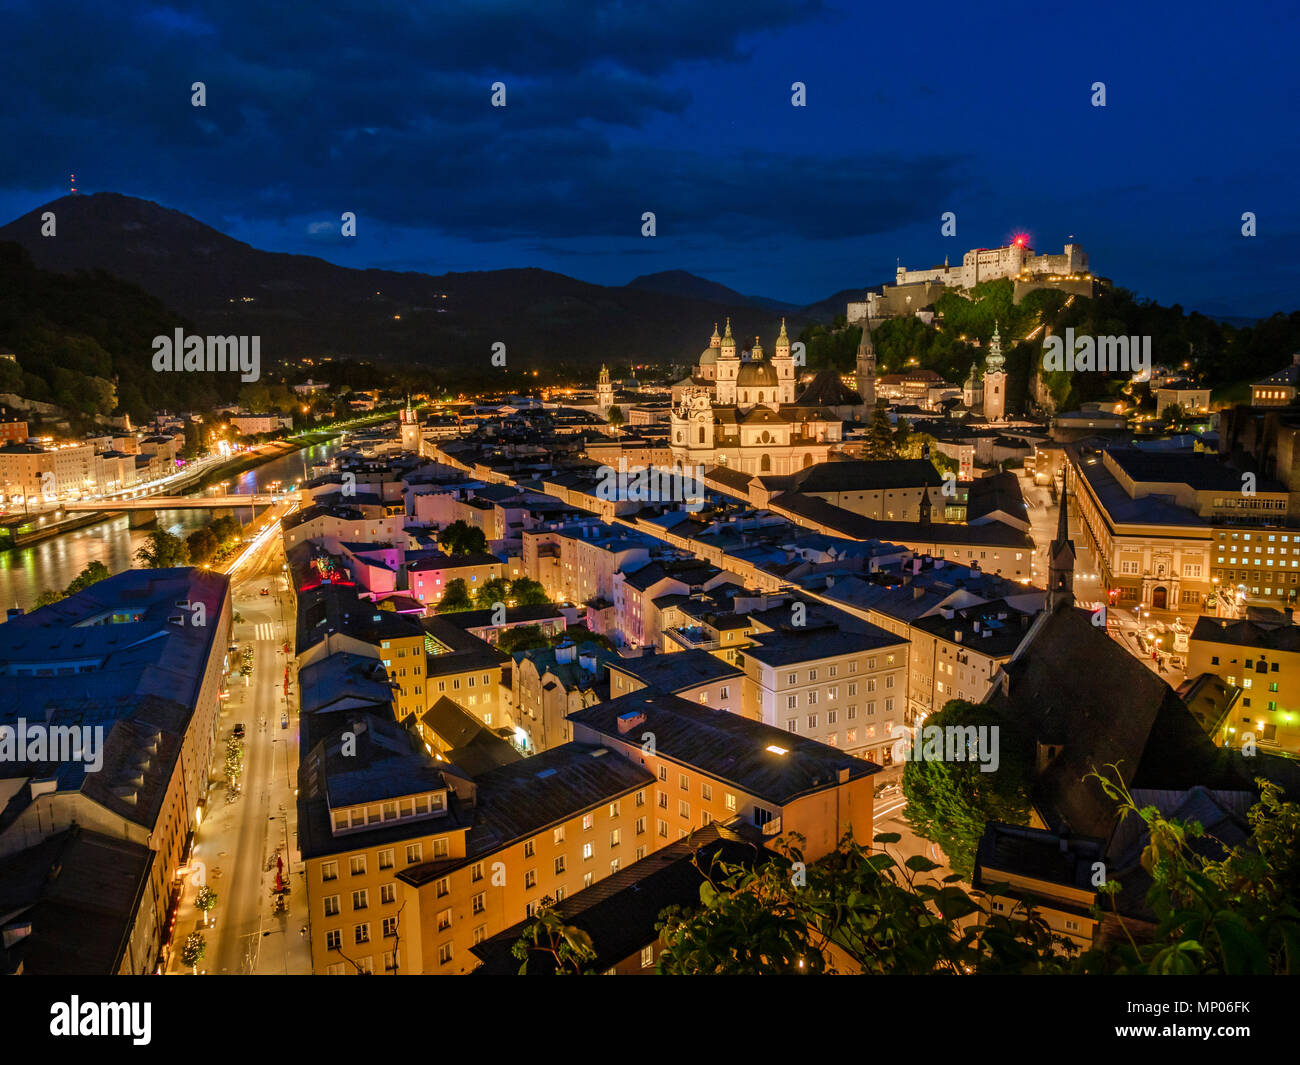 Historic town centre of Salzburg at night, Austria, Europe Stock Photo